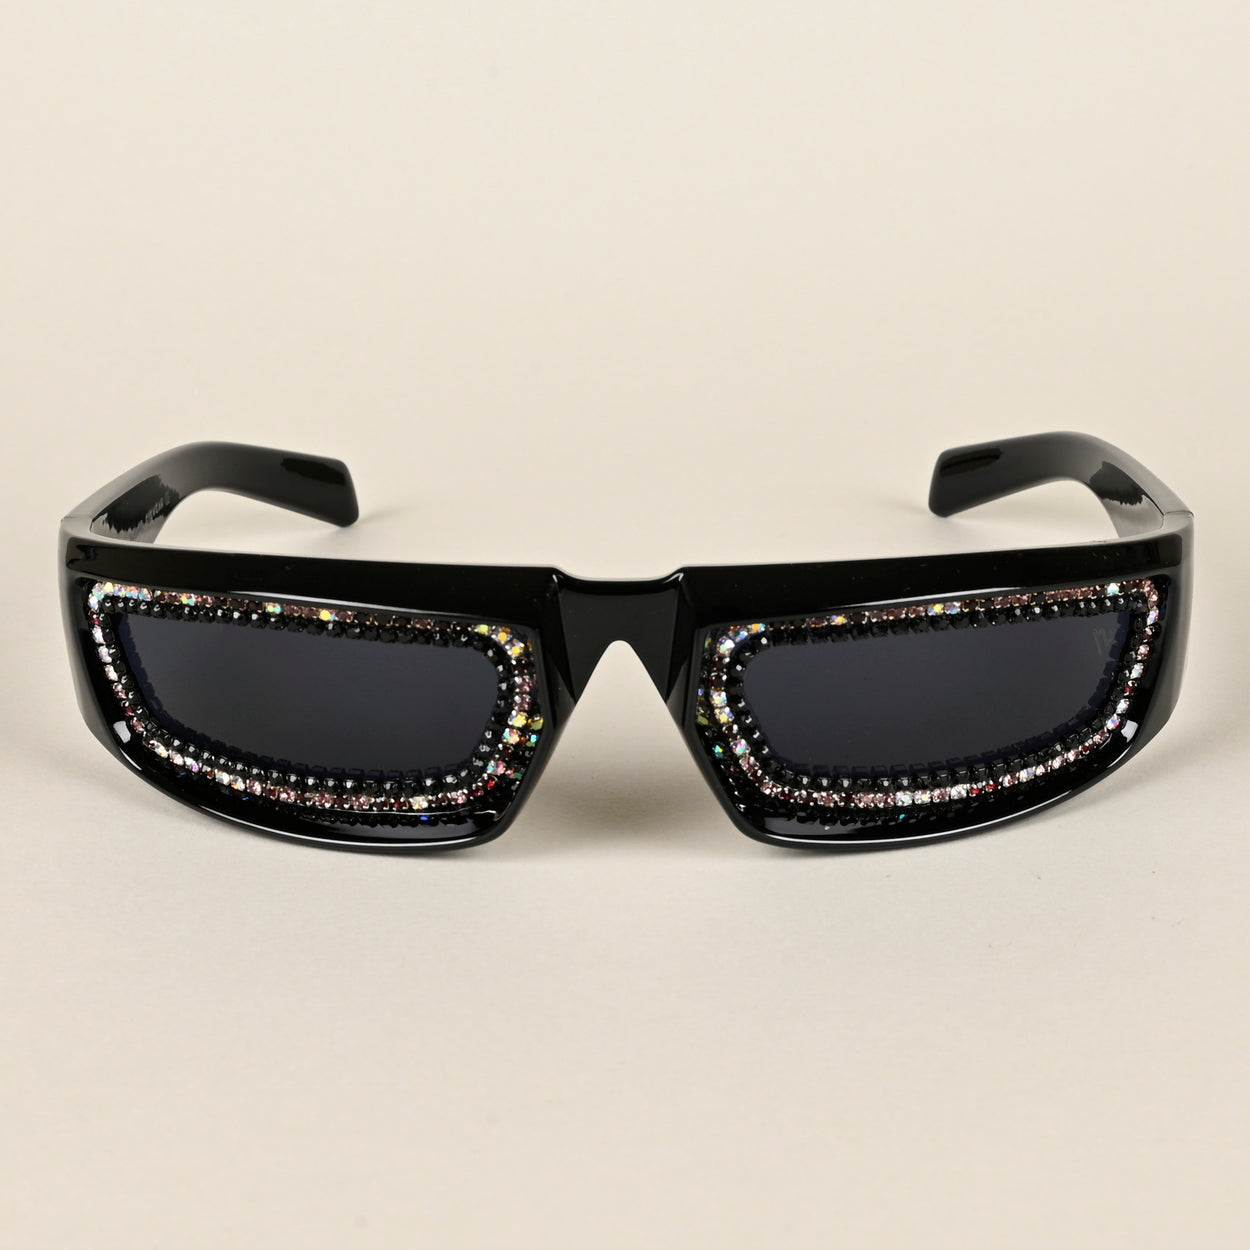 Voyage Black Wrap-Around Sunglasses for Men & Women - MG4352